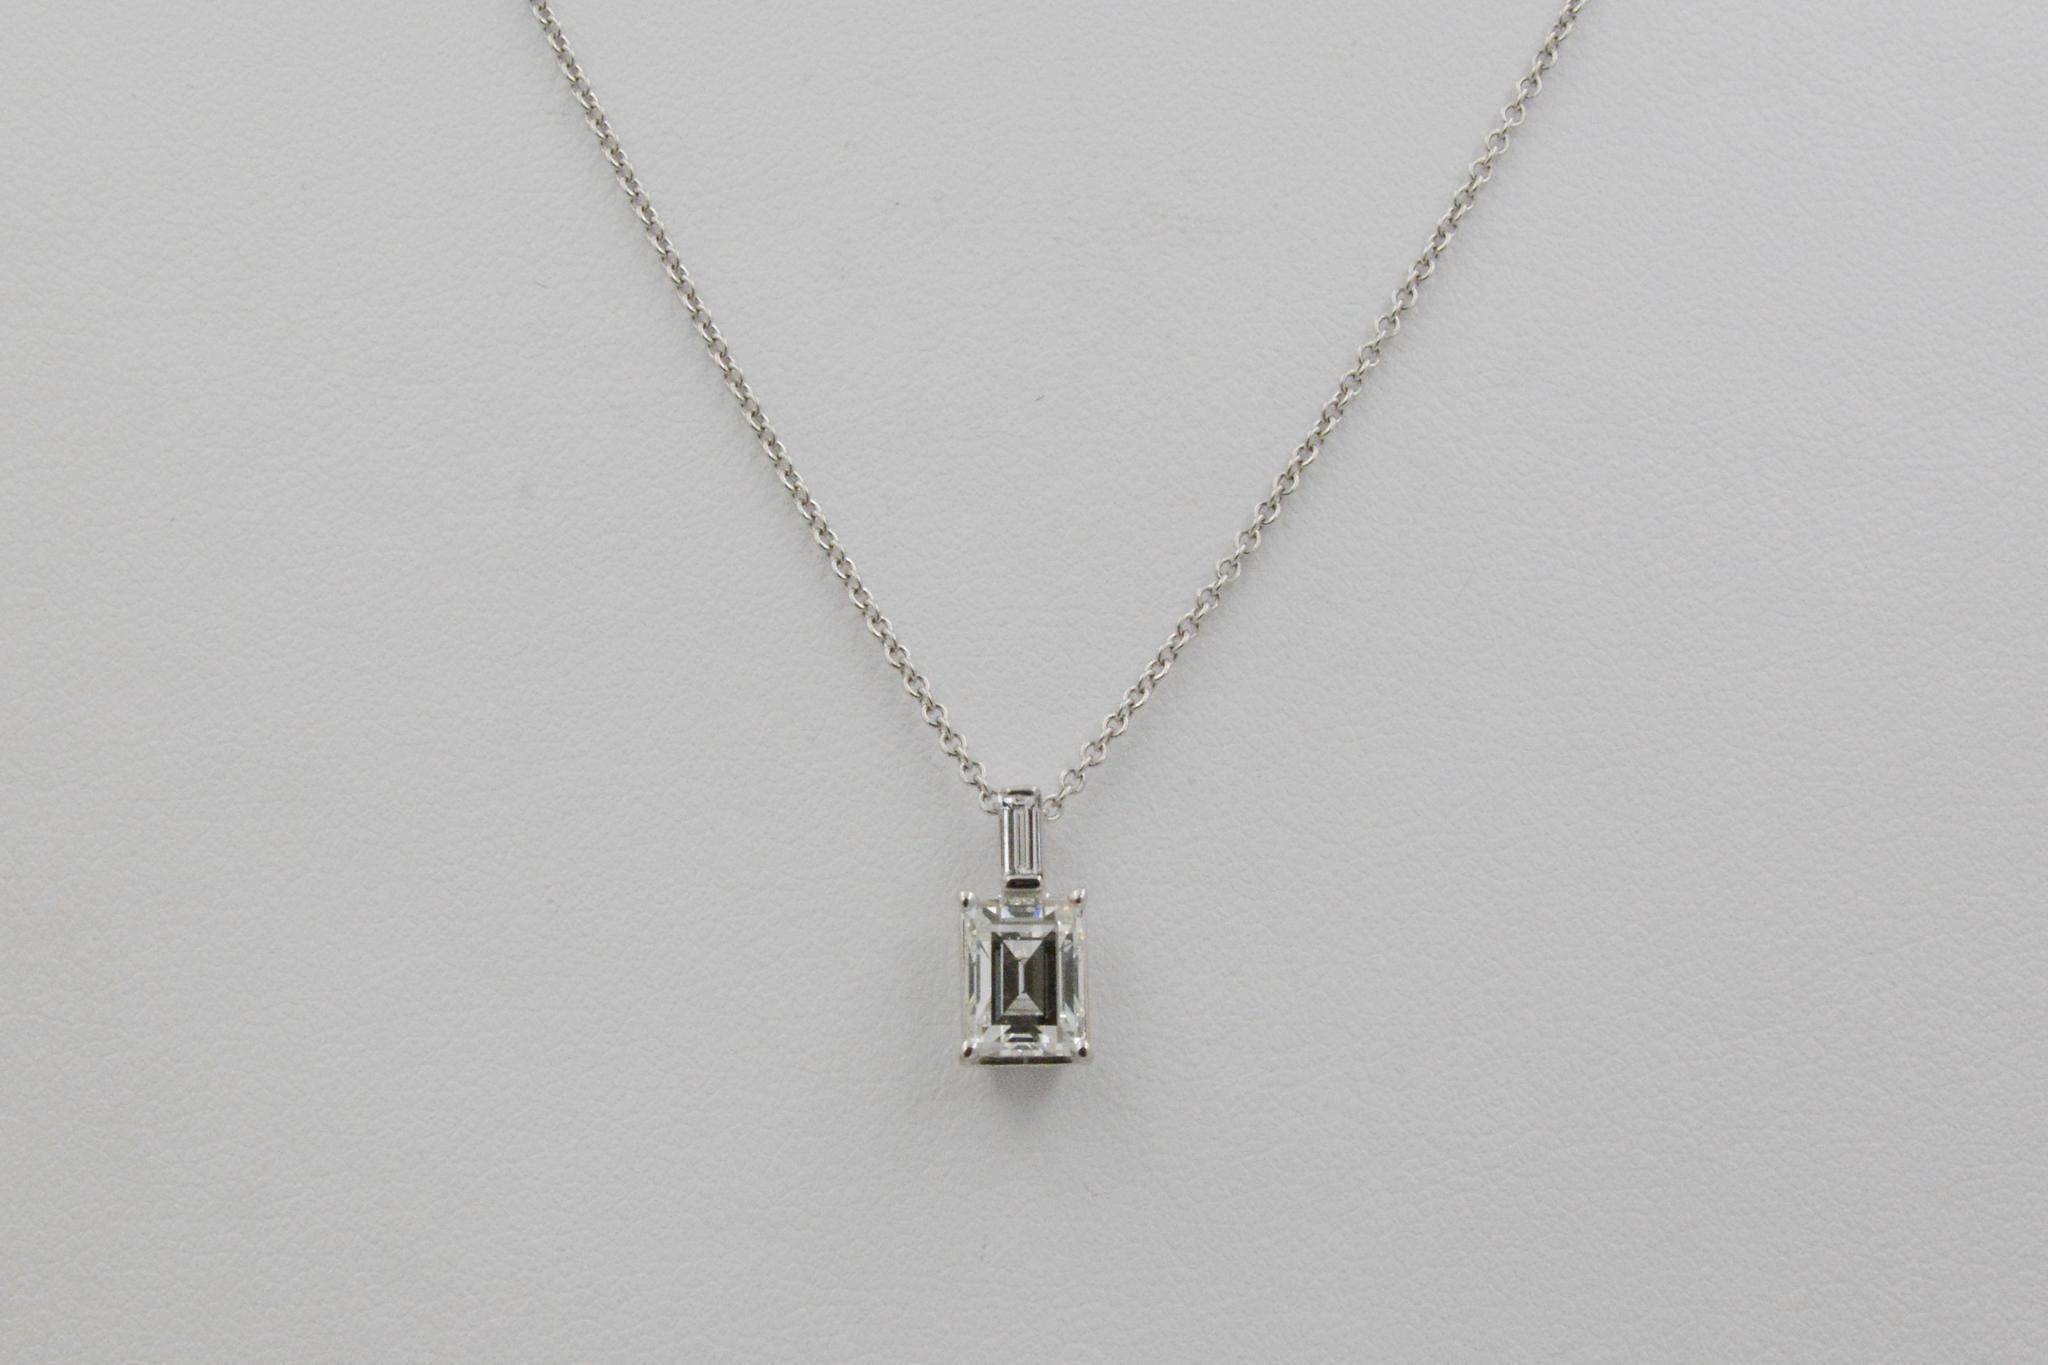 1.33 Carat Emerald Cut Diamond and 18 Karat White Gold Pendant 2